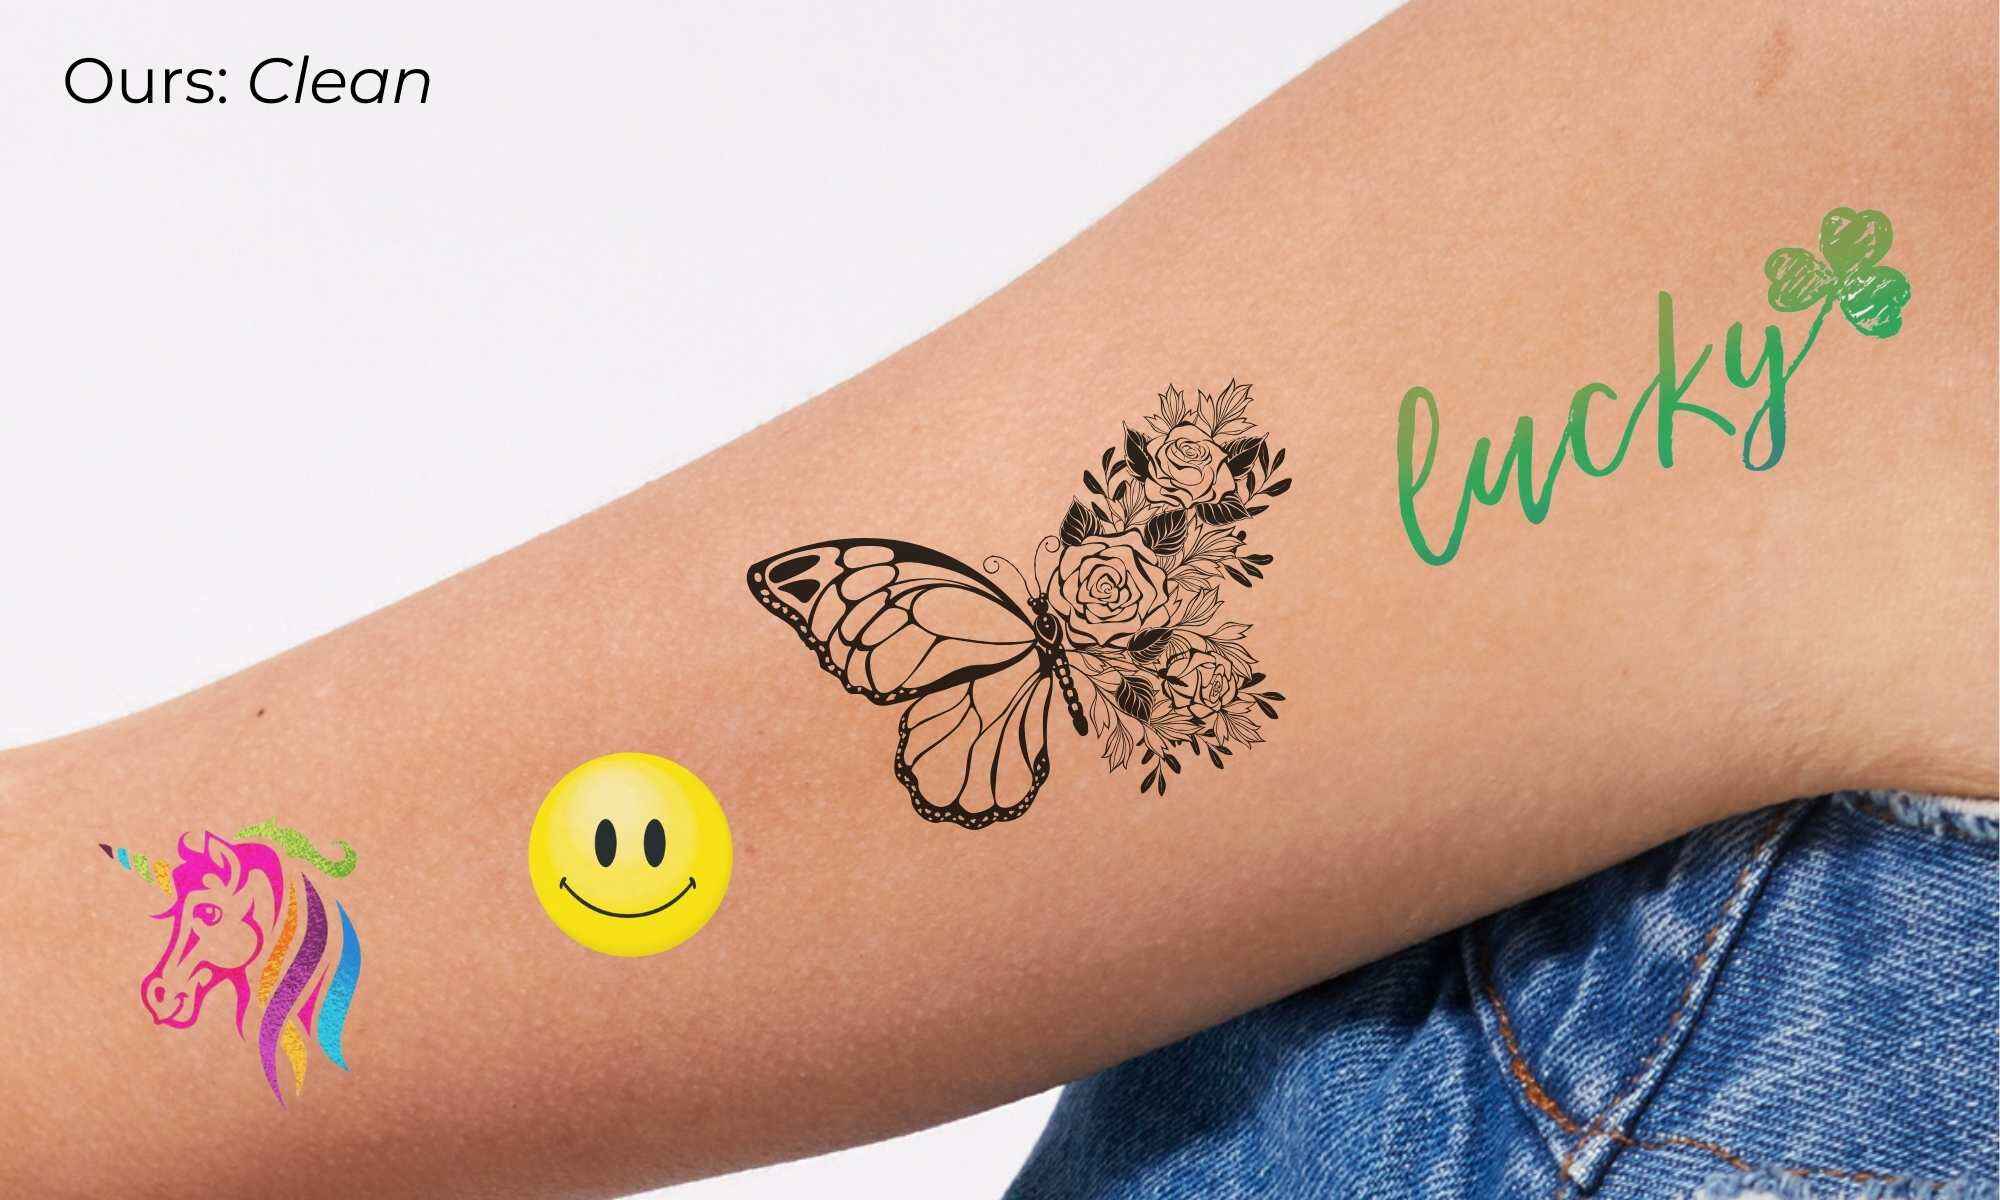 Sexy Temporary Tattoos Sticker for Women Girls Kids Children Waterproof Tattoo  Paper Flower Letter Butterfly Fake Bodi Art Tatoo